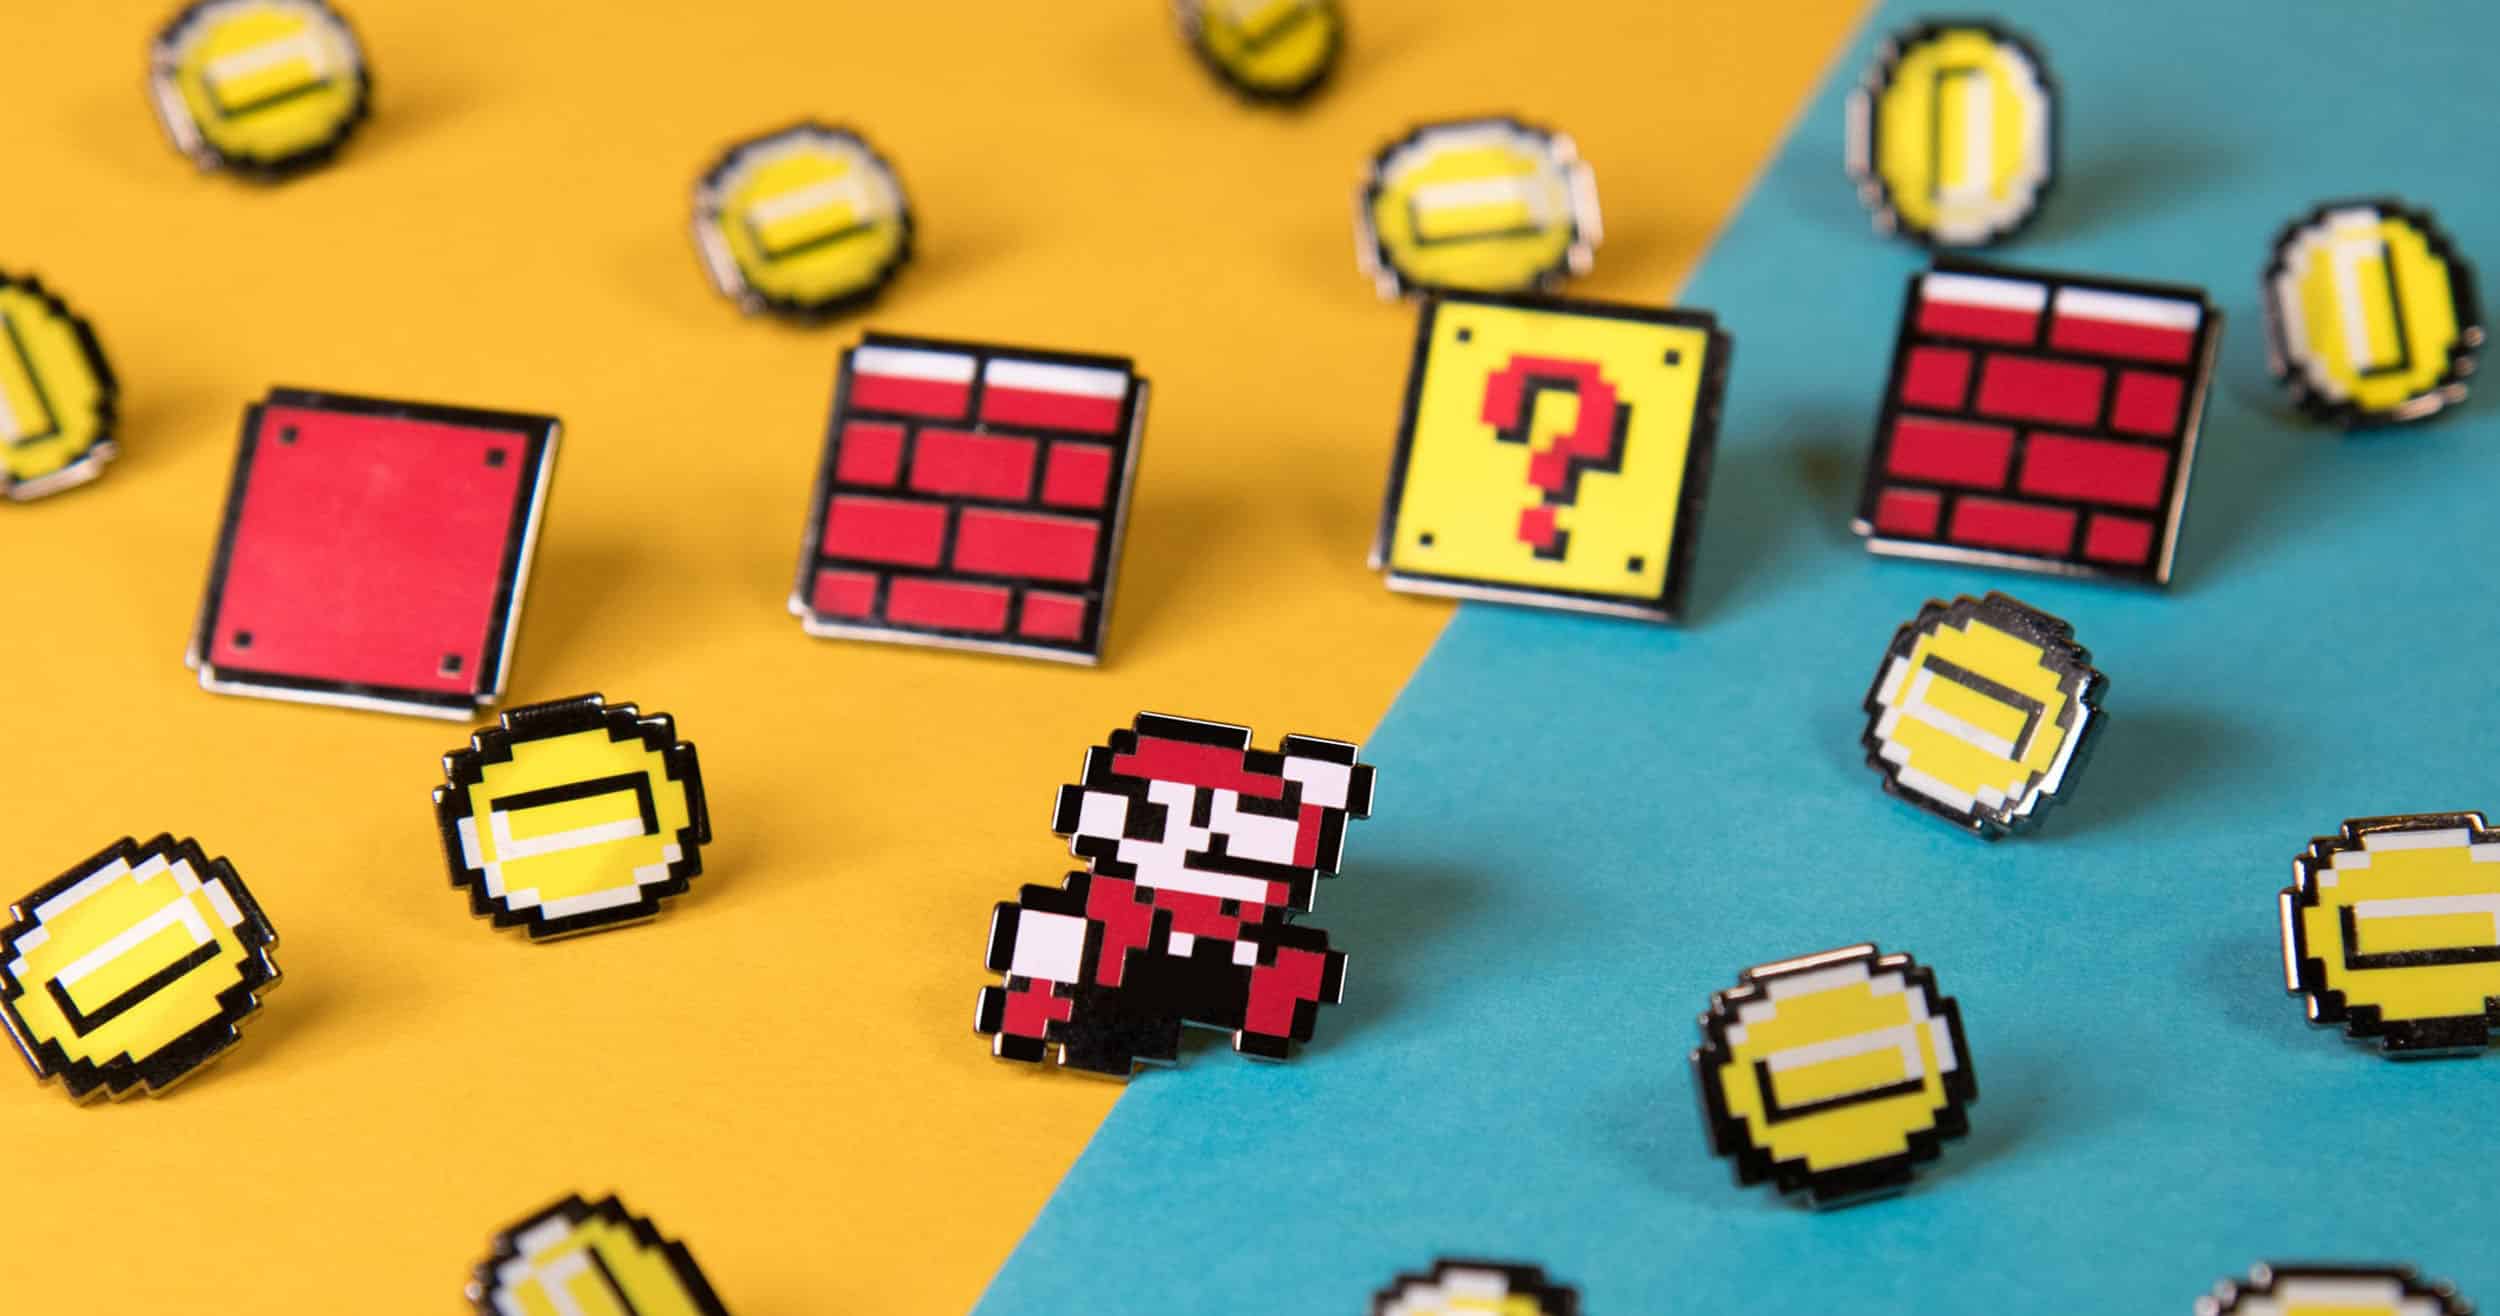 Super Mario Pins